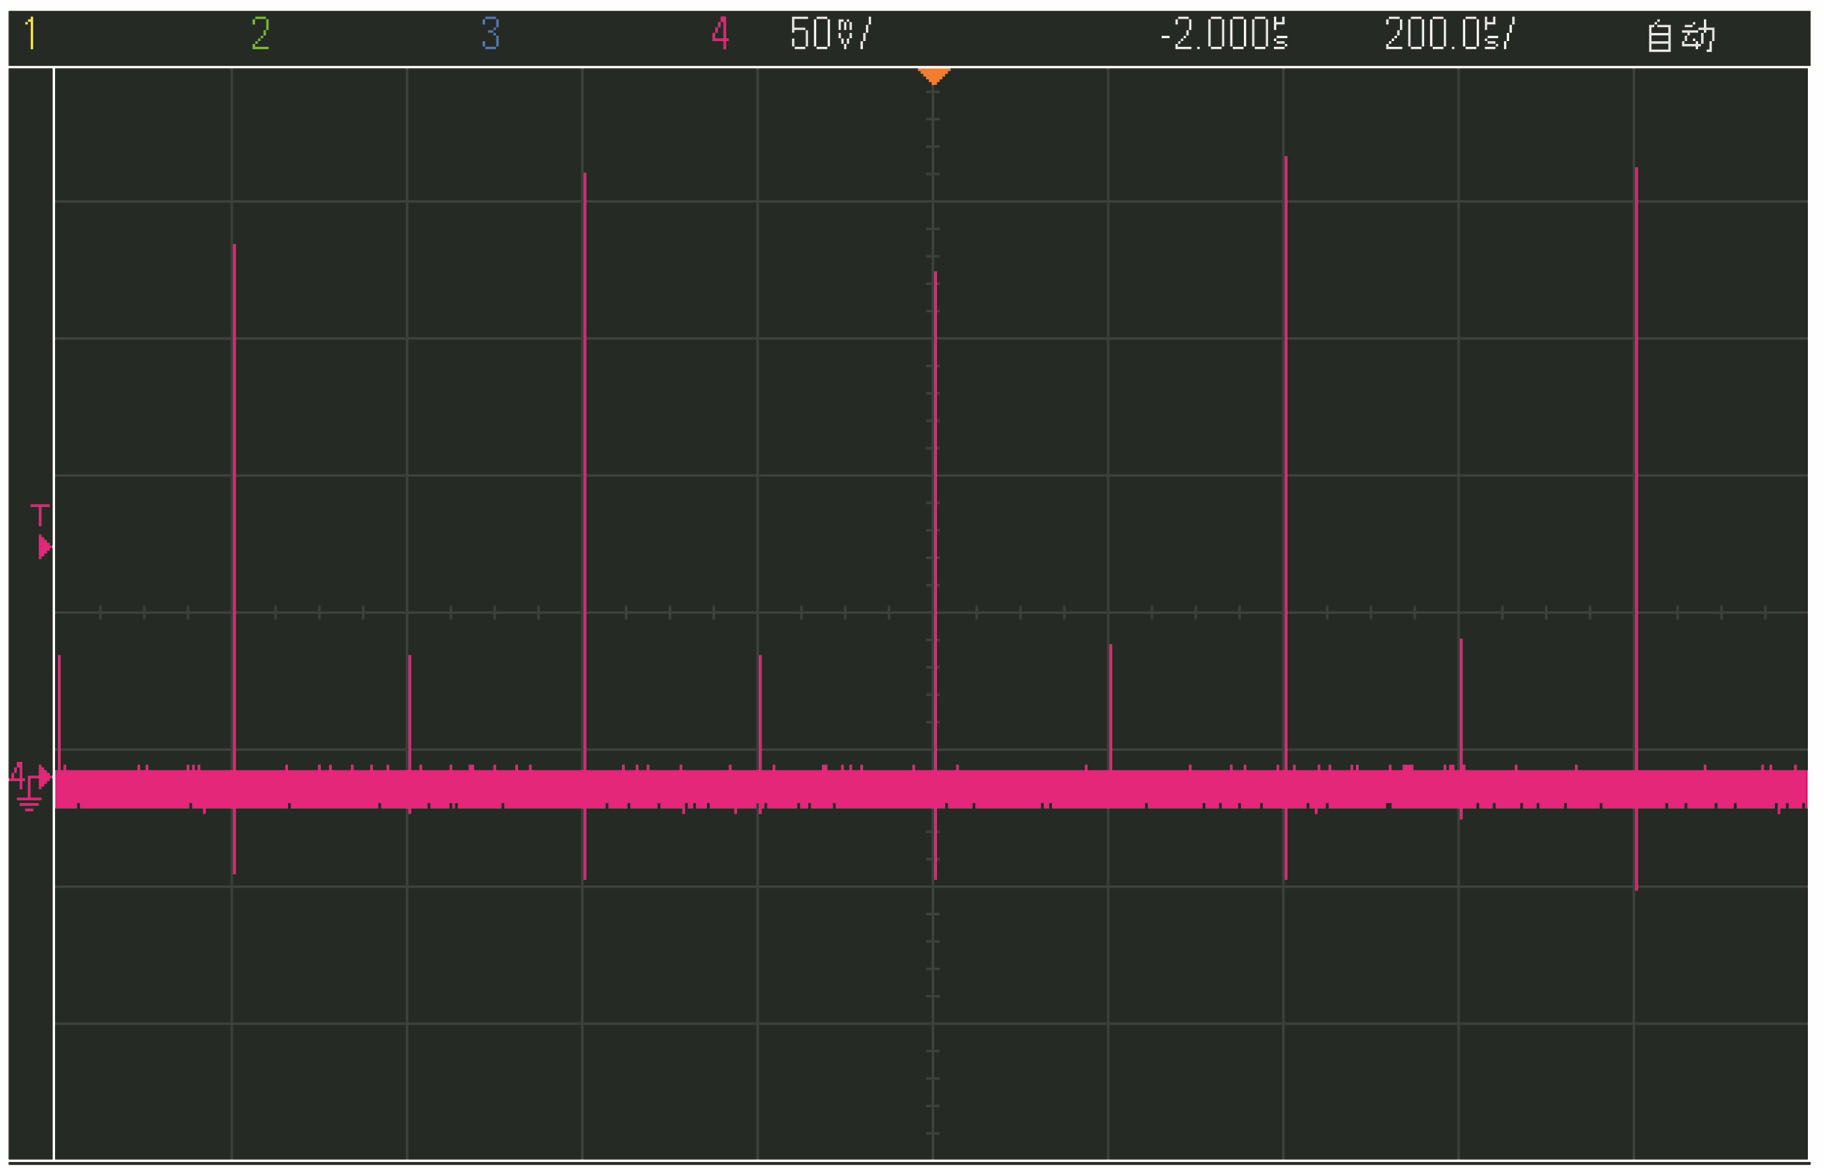 Output waveform of 5 kHz repetition rate laser